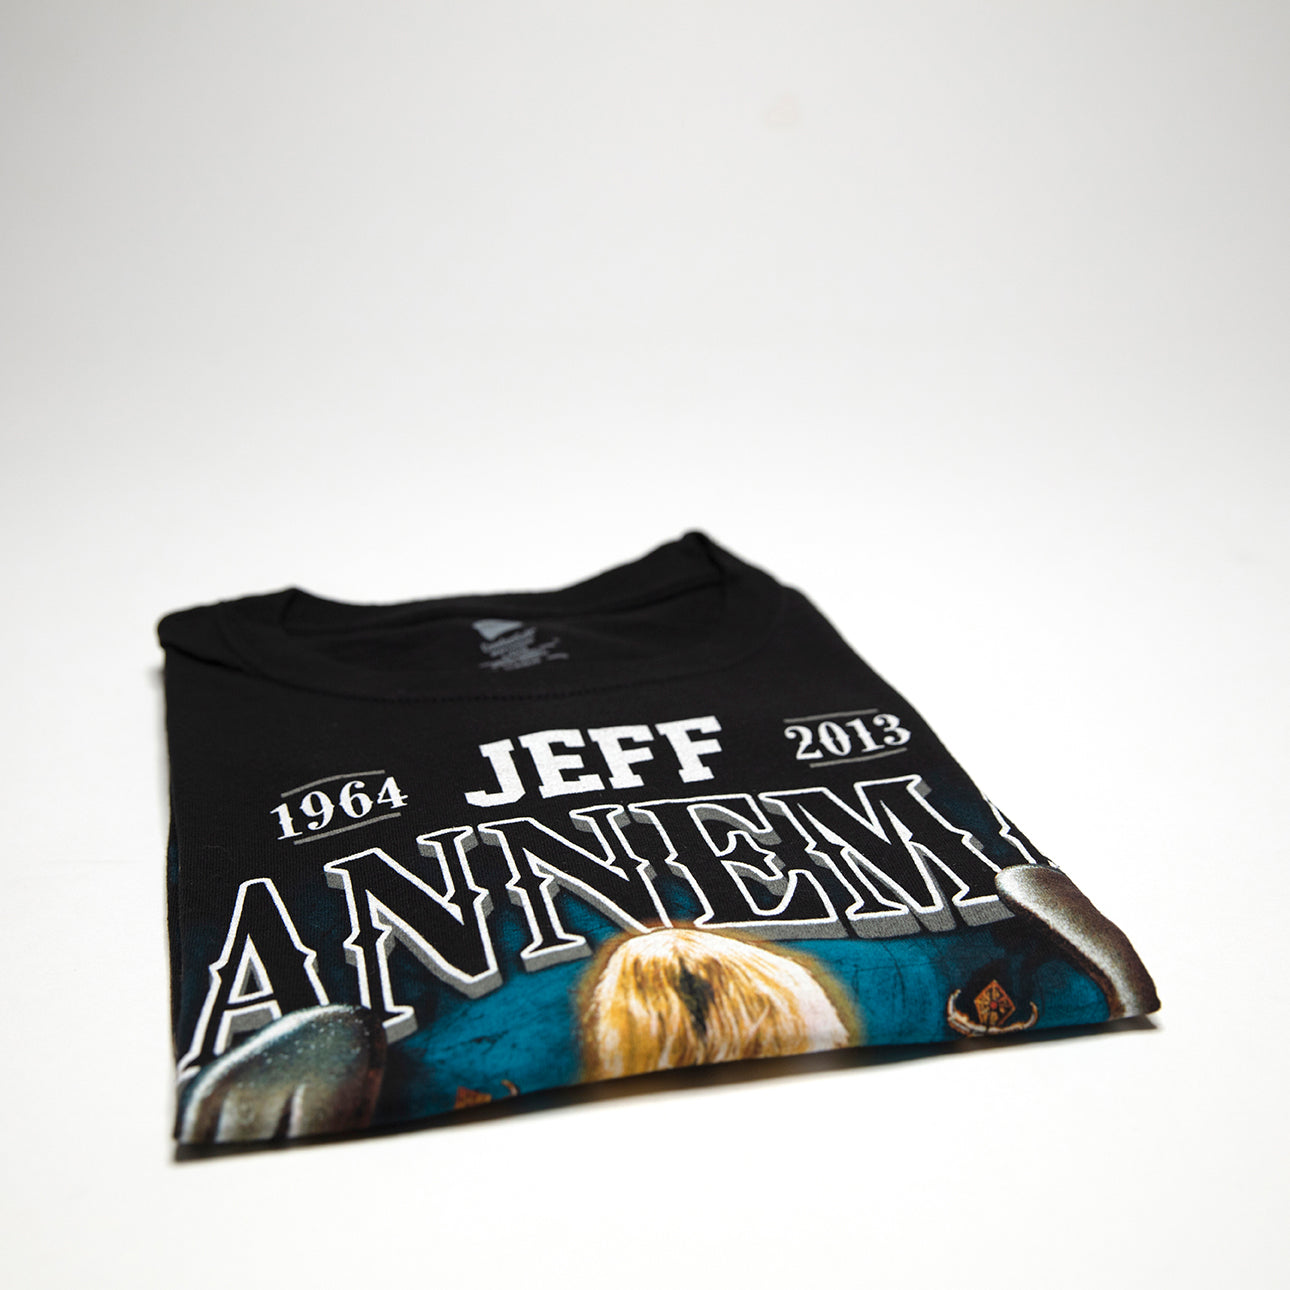 Slayer - Jeff Hanneman Memorial RIP 2013 Shirt Size Large